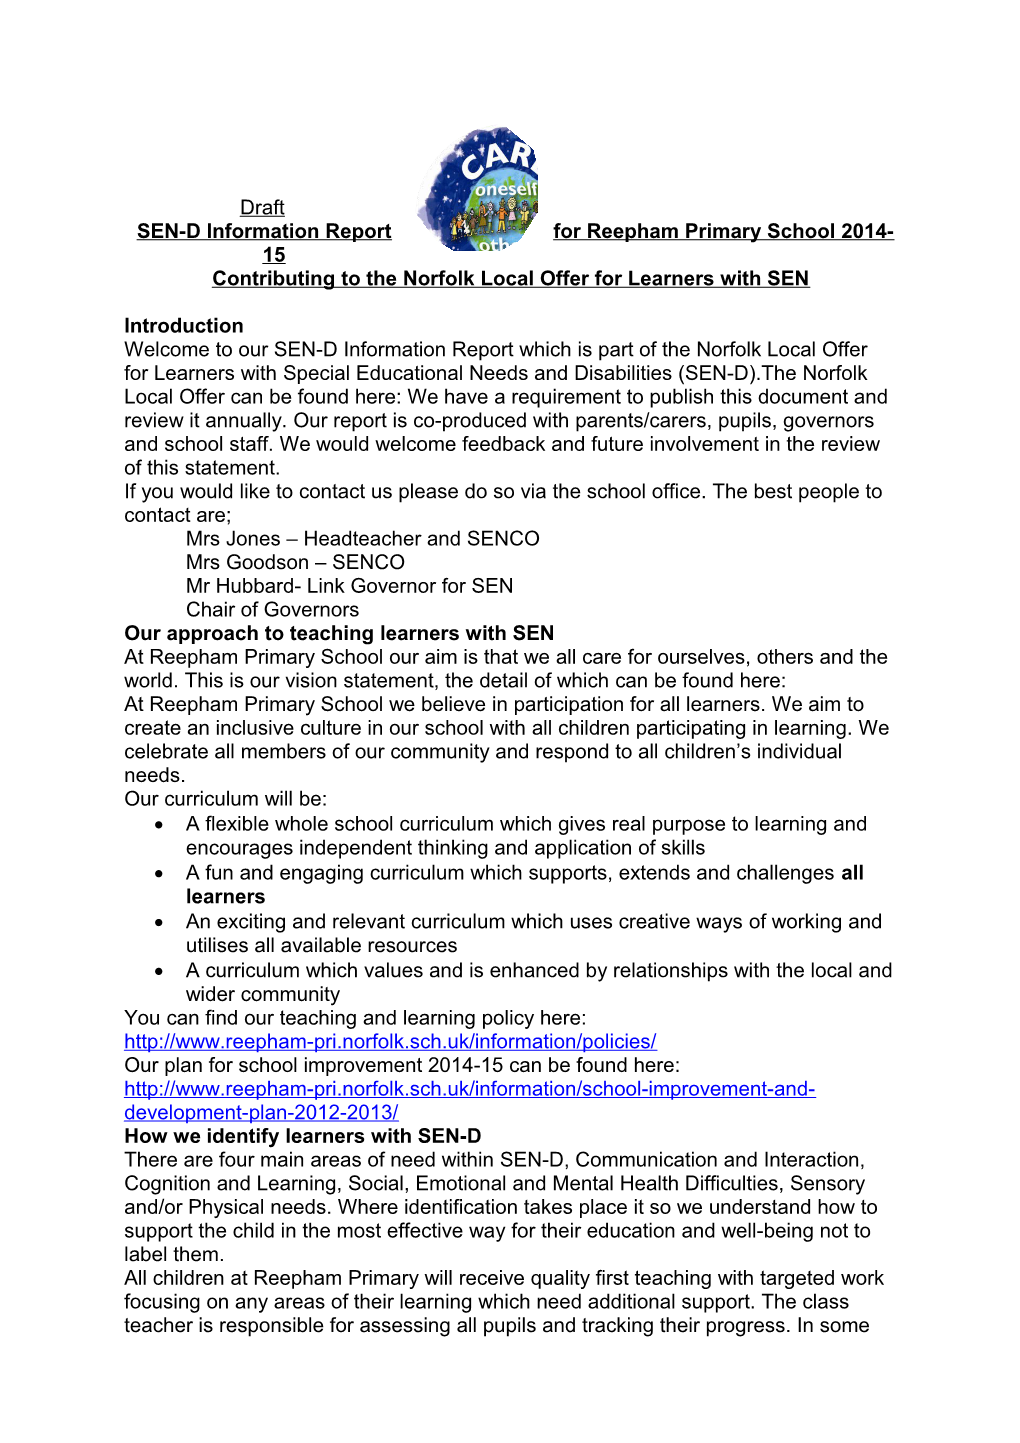 SEN-D Information Report for Reepham Primary School 2014-15